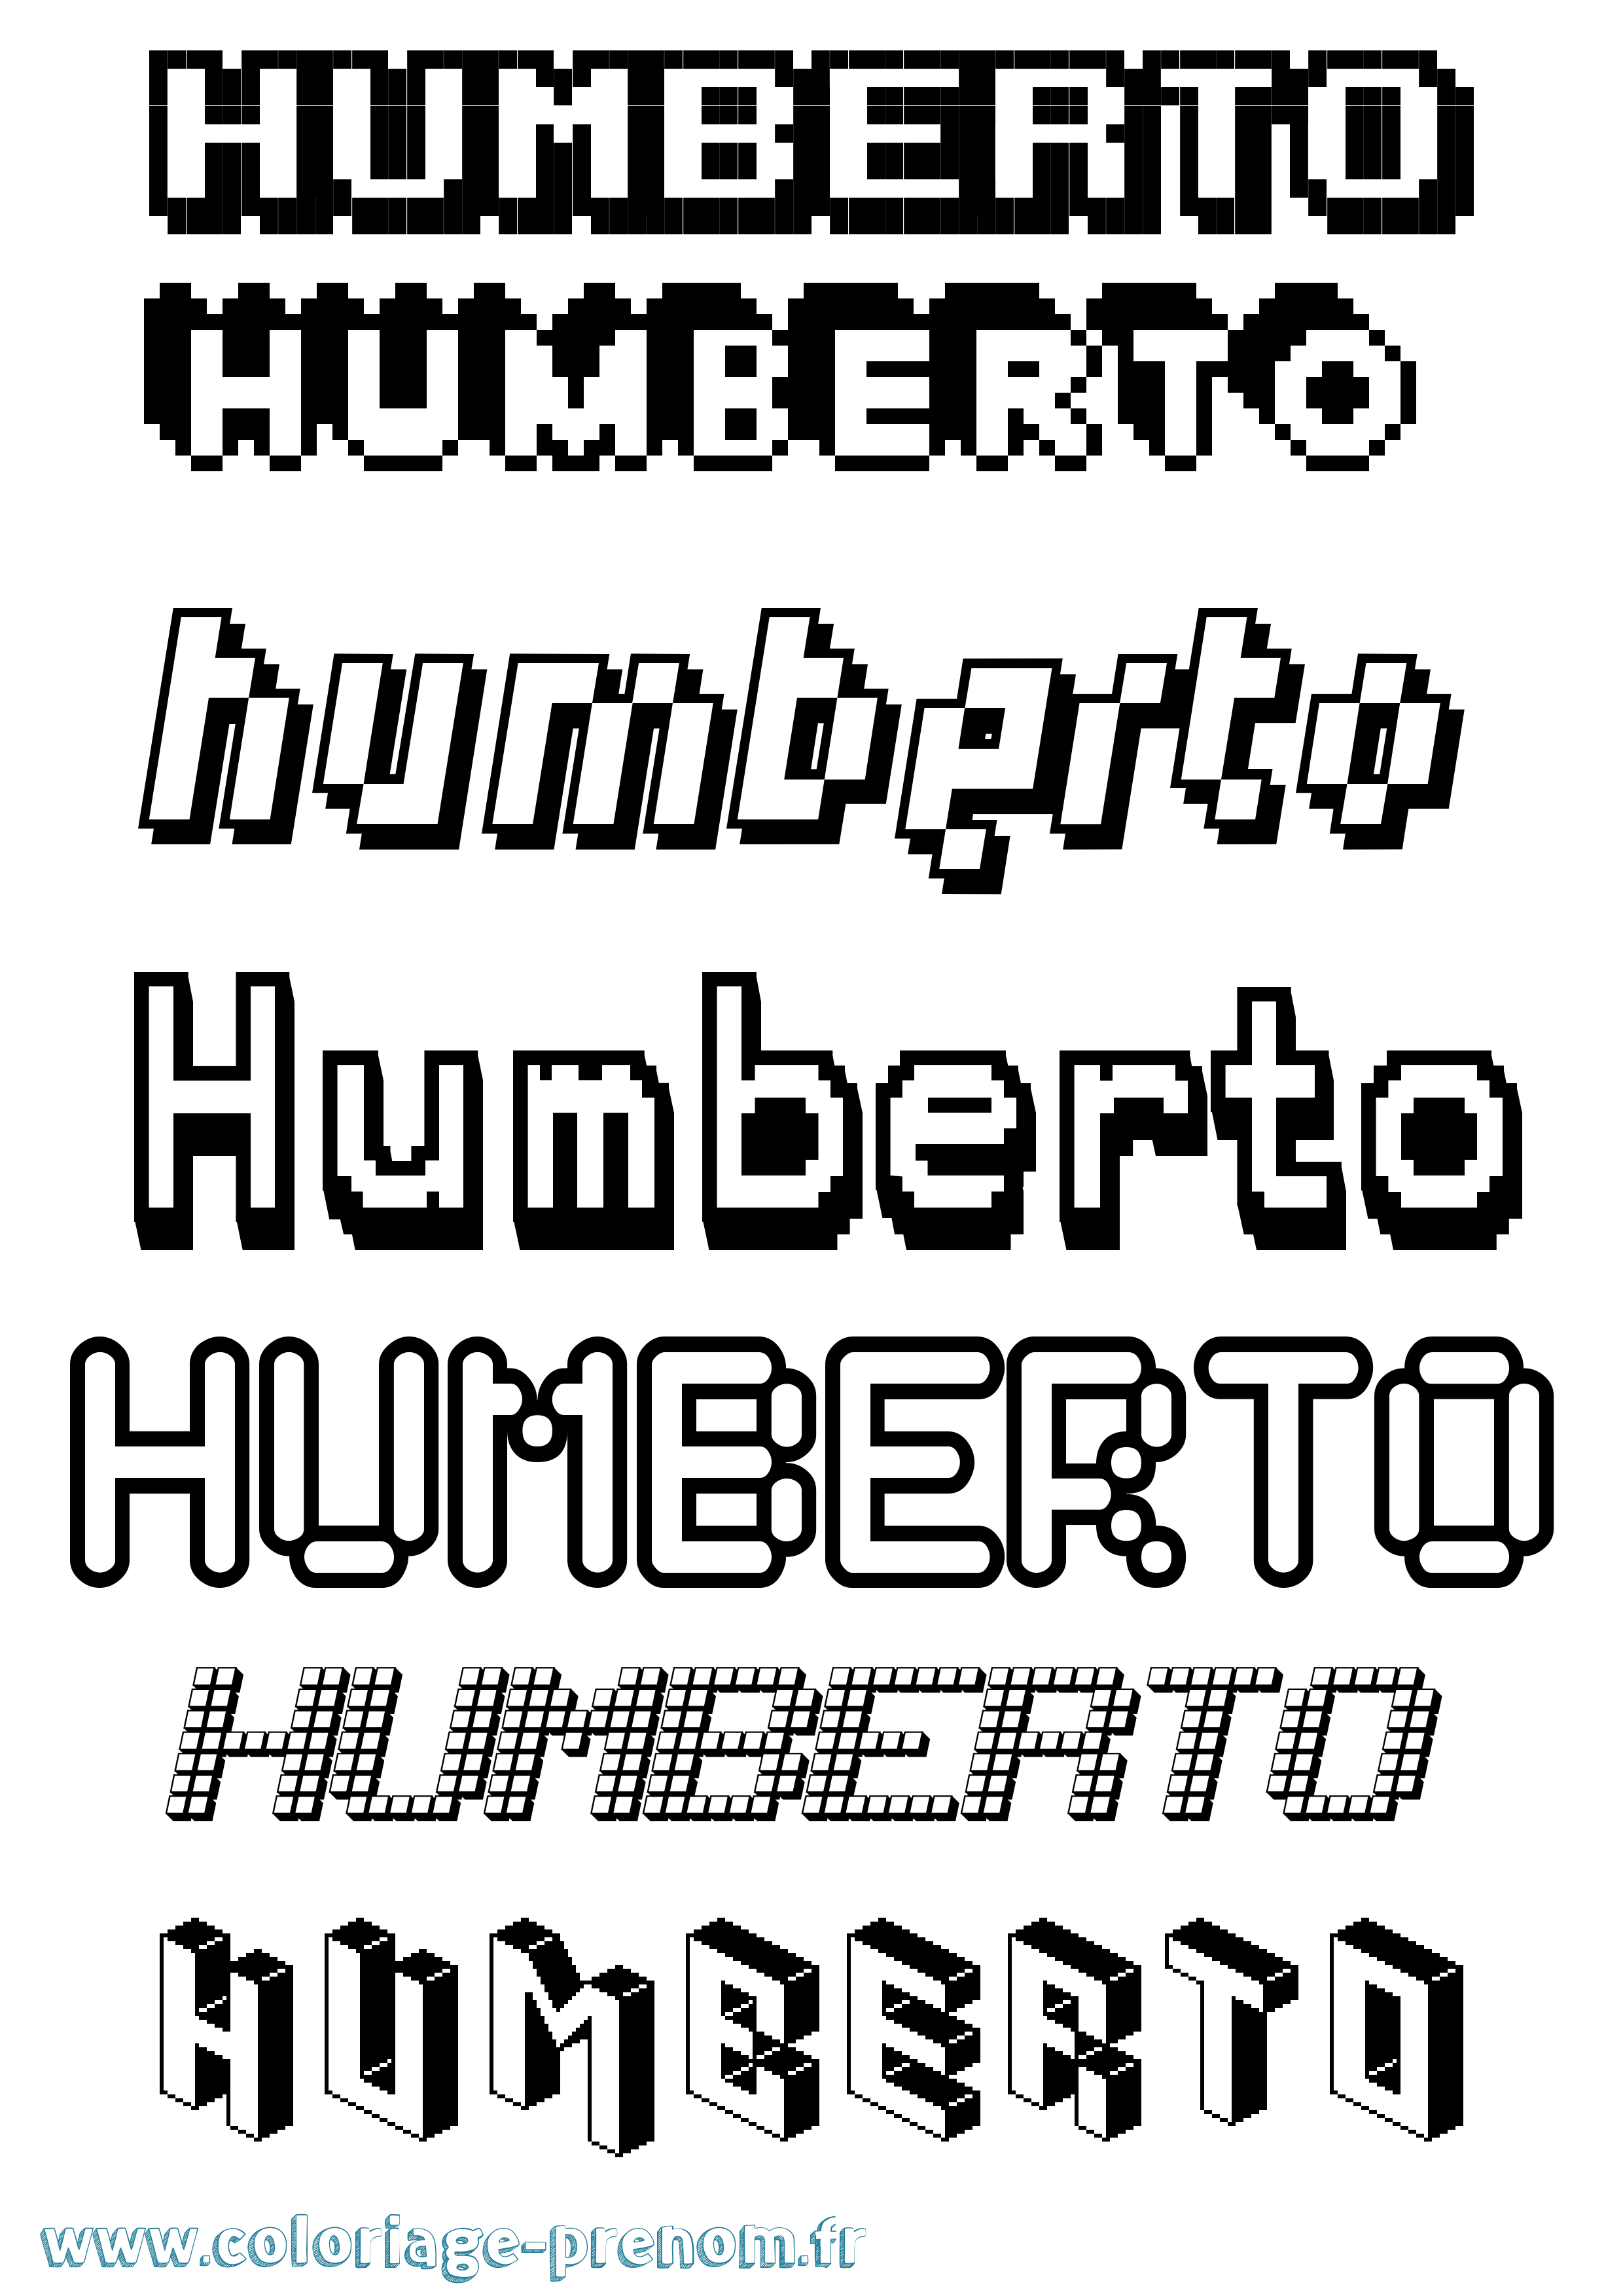 Coloriage prénom Humberto Pixel